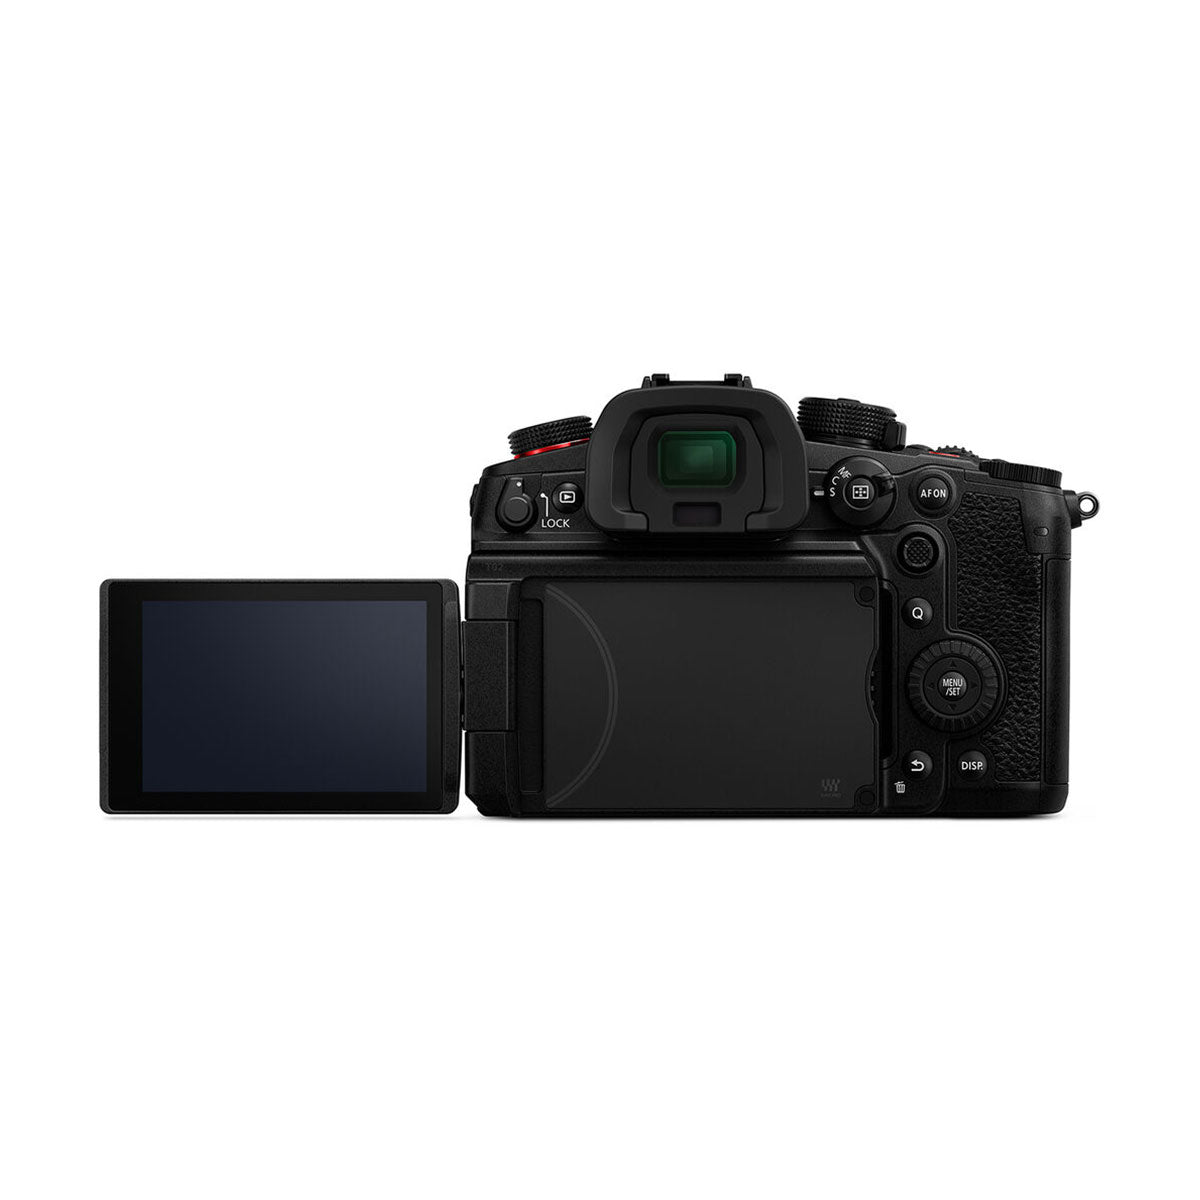 Panasonic Lumix GH7 Mirrorless Camera with 12-60mm f/2.8-4 Lens